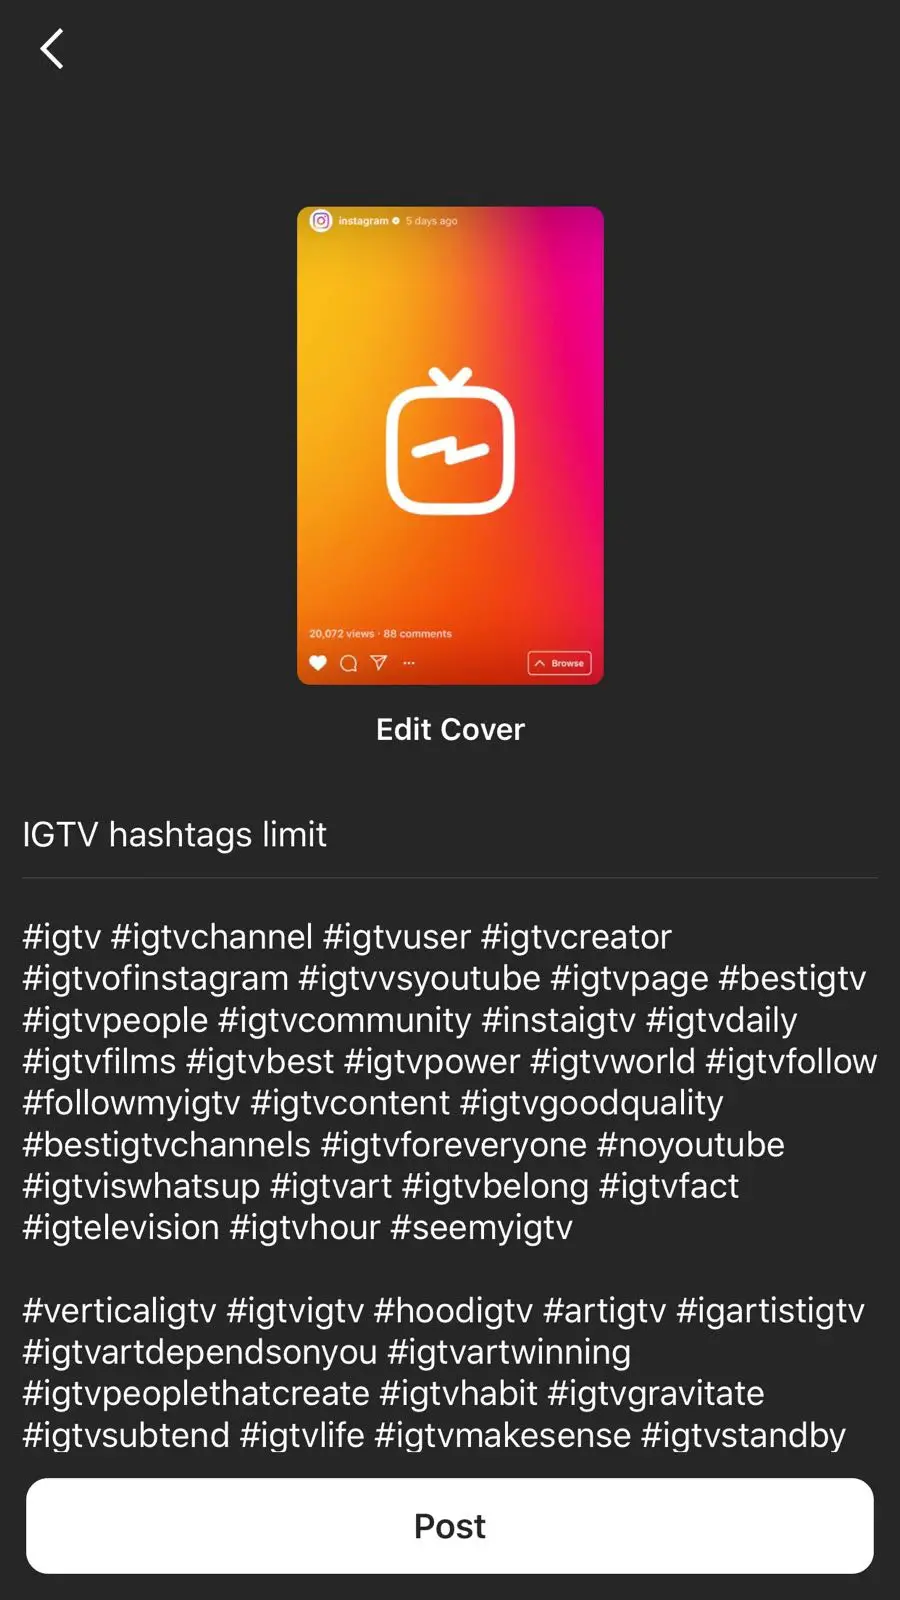 igtv hashtags limit